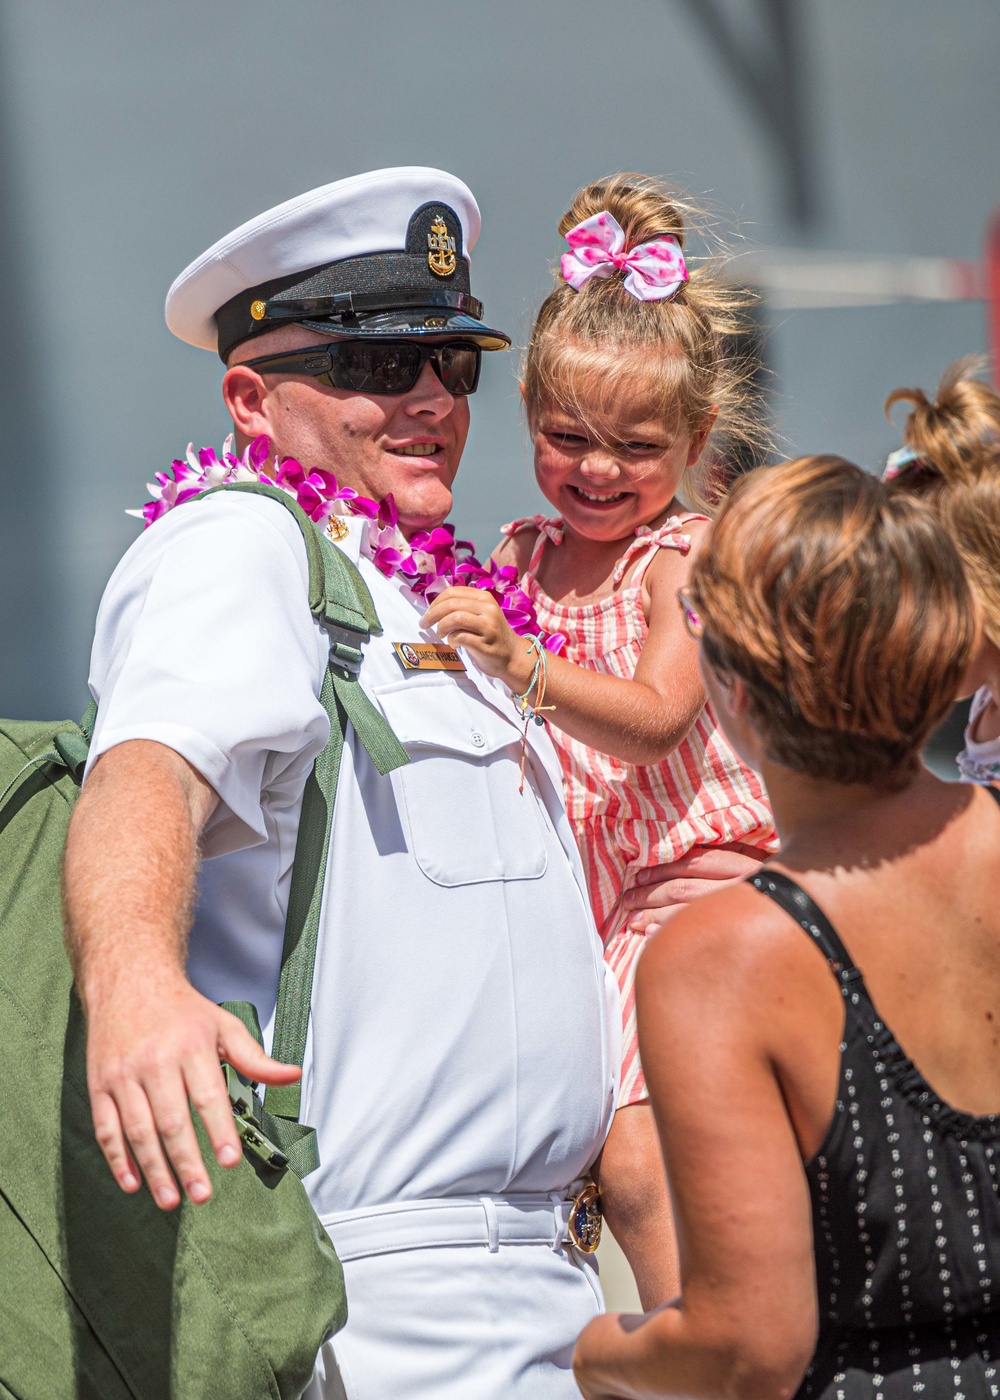 USS Frank E Petersen Jr Arrives at Pearl Harbor Homeport